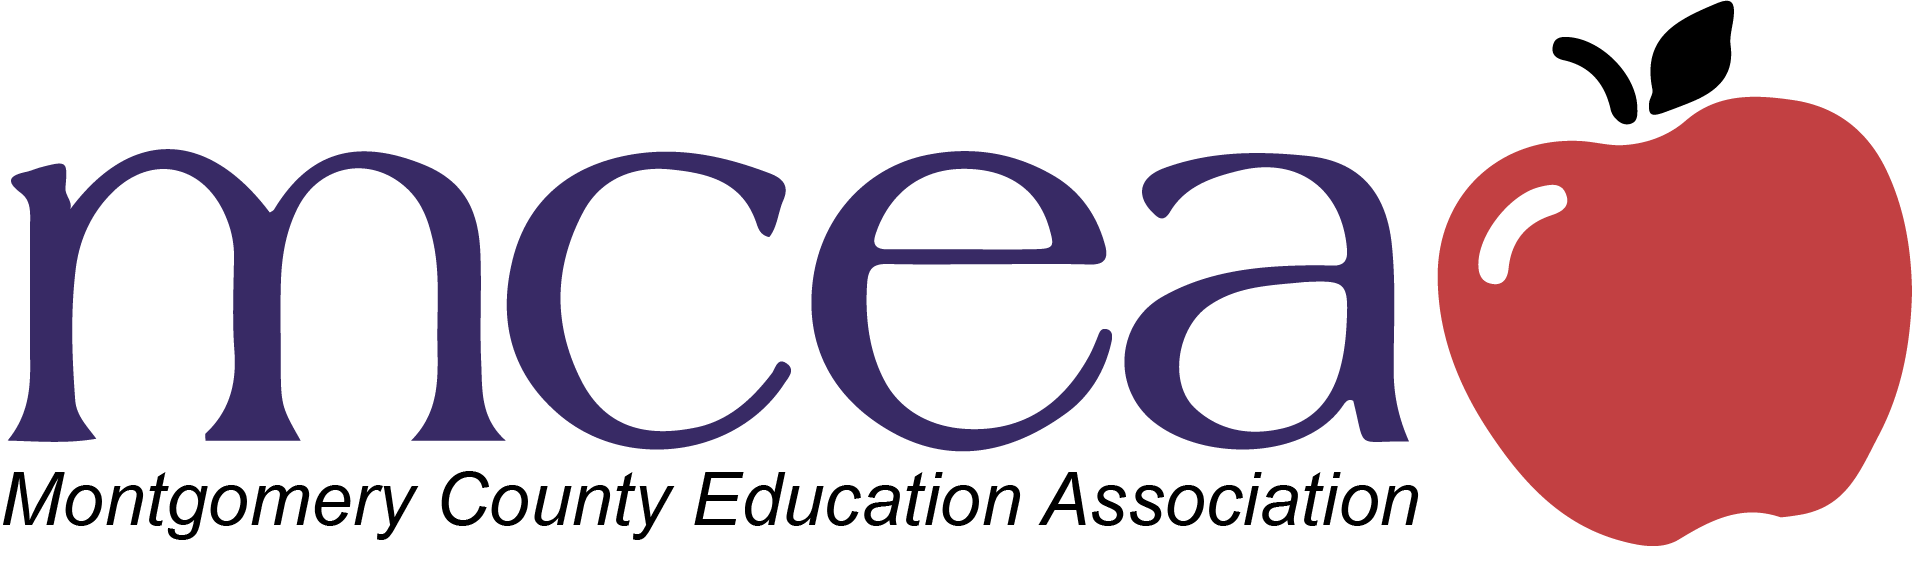 MCEA-Logo-002.png